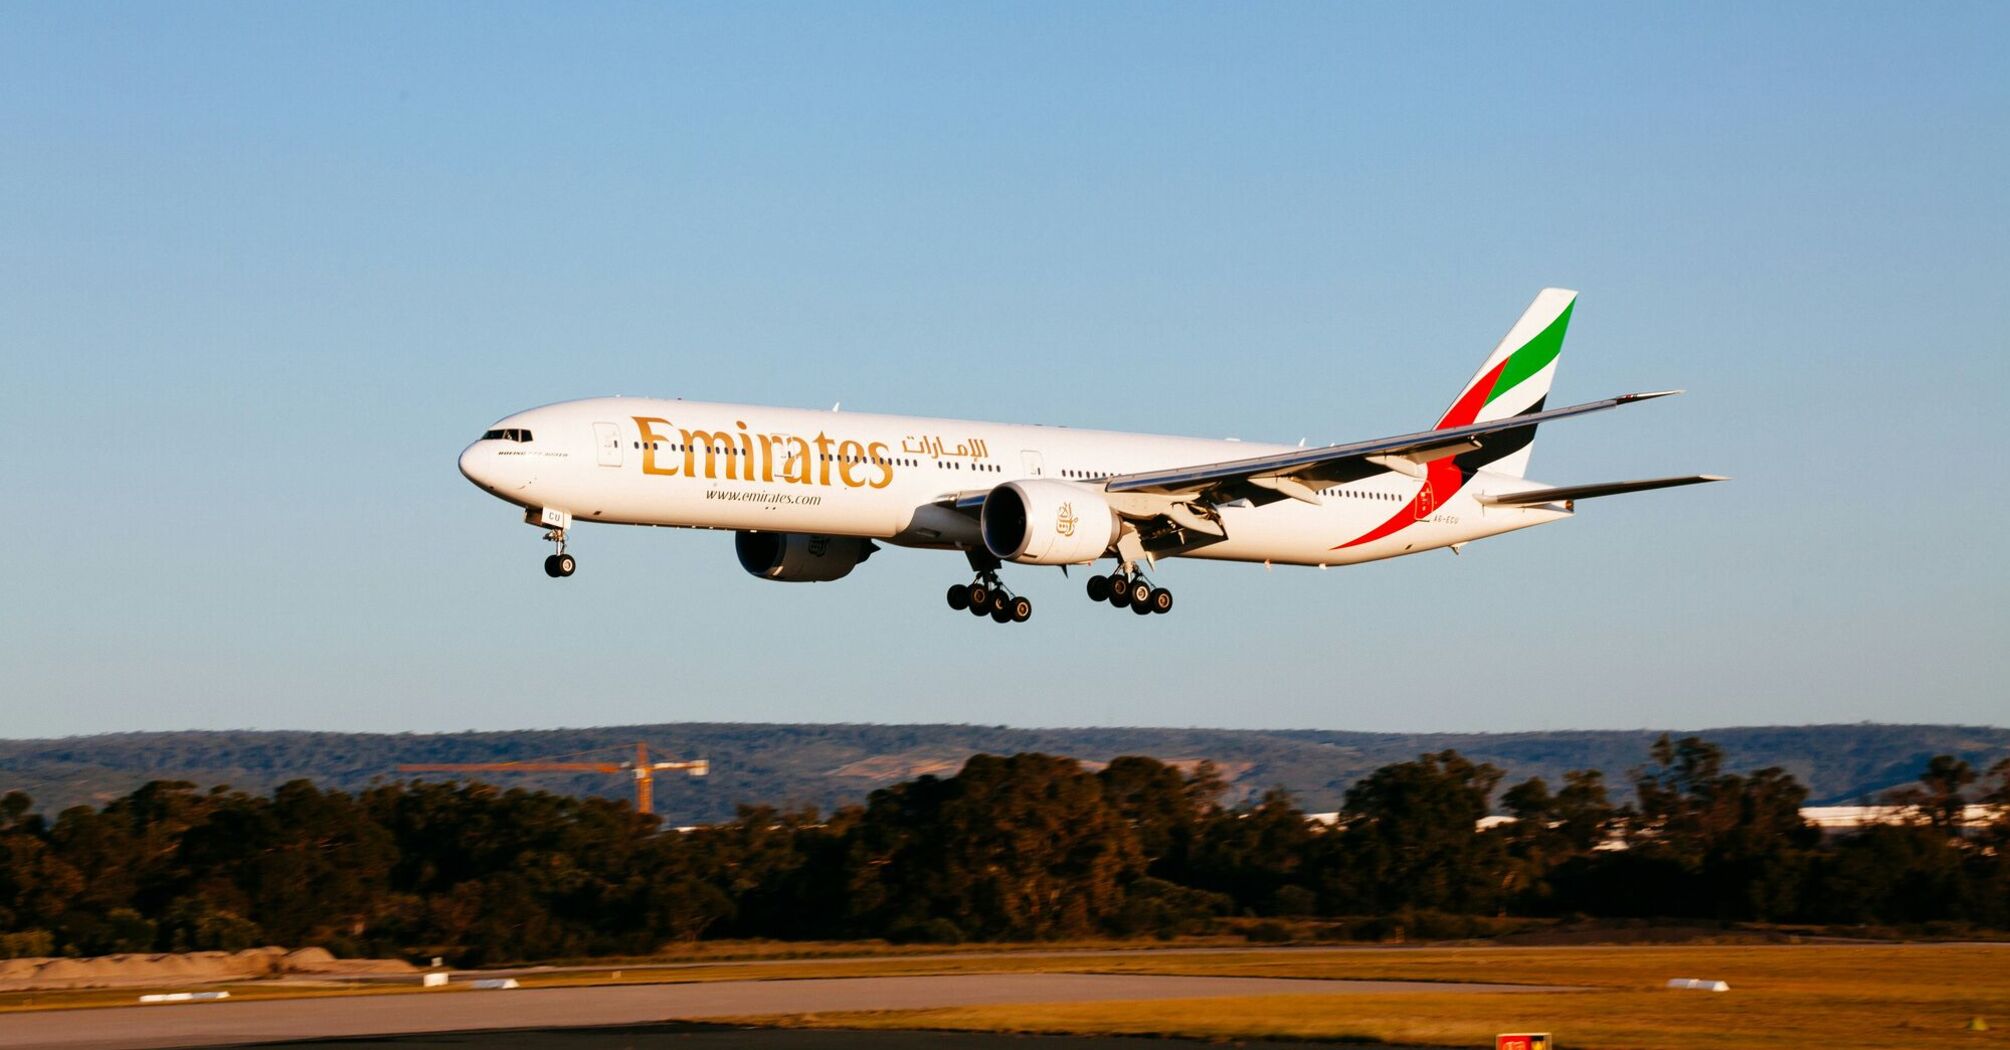 Emirates plane arriving at Perth International Airport